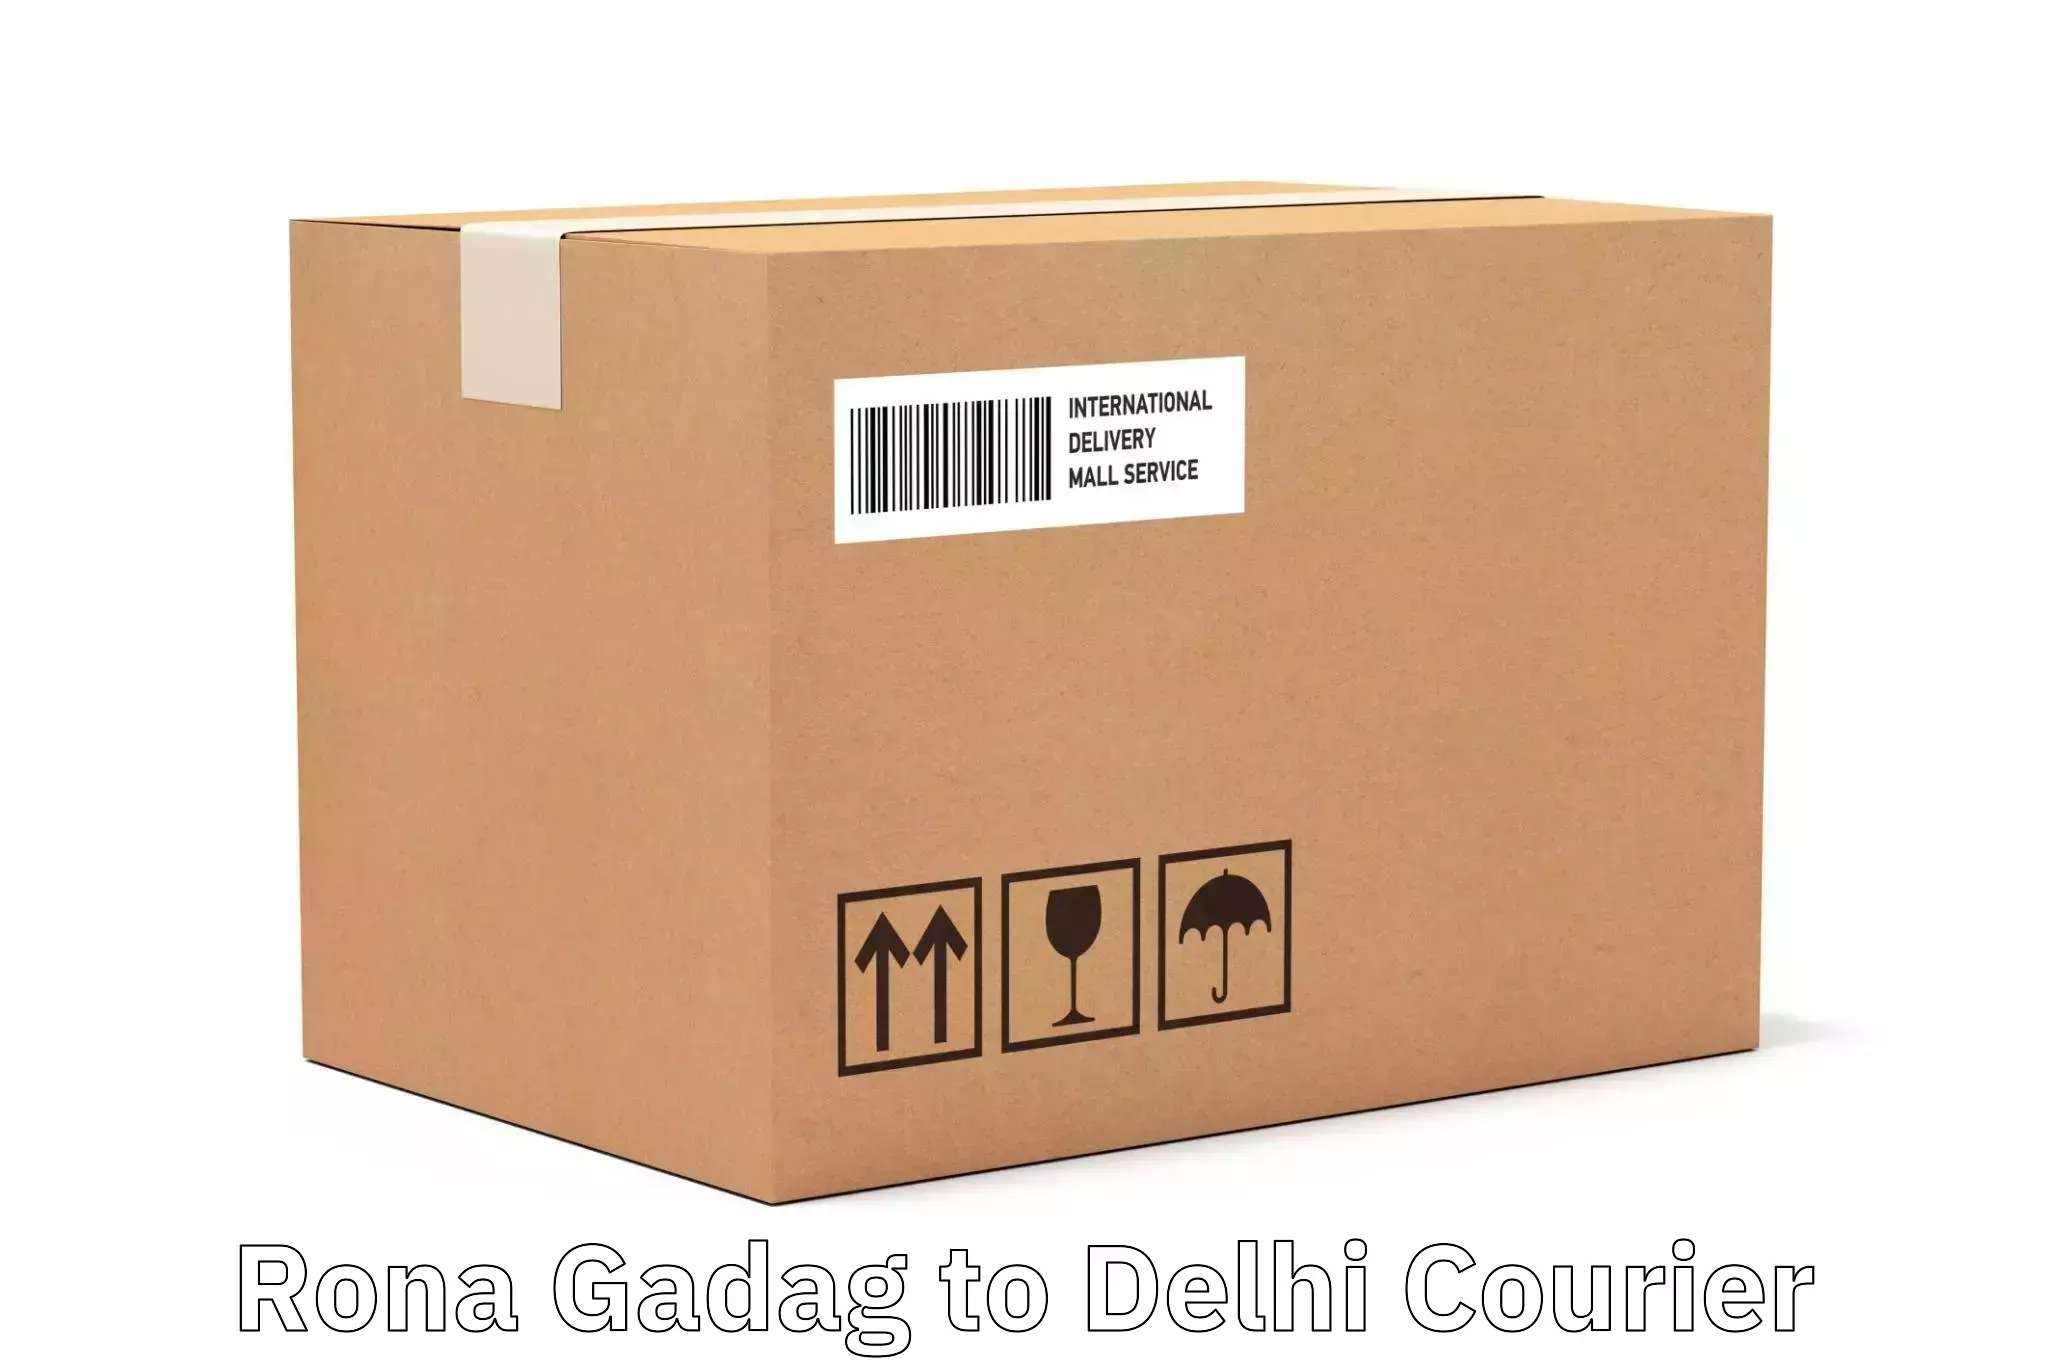 Efficient cargo handling in Rona Gadag to Delhi